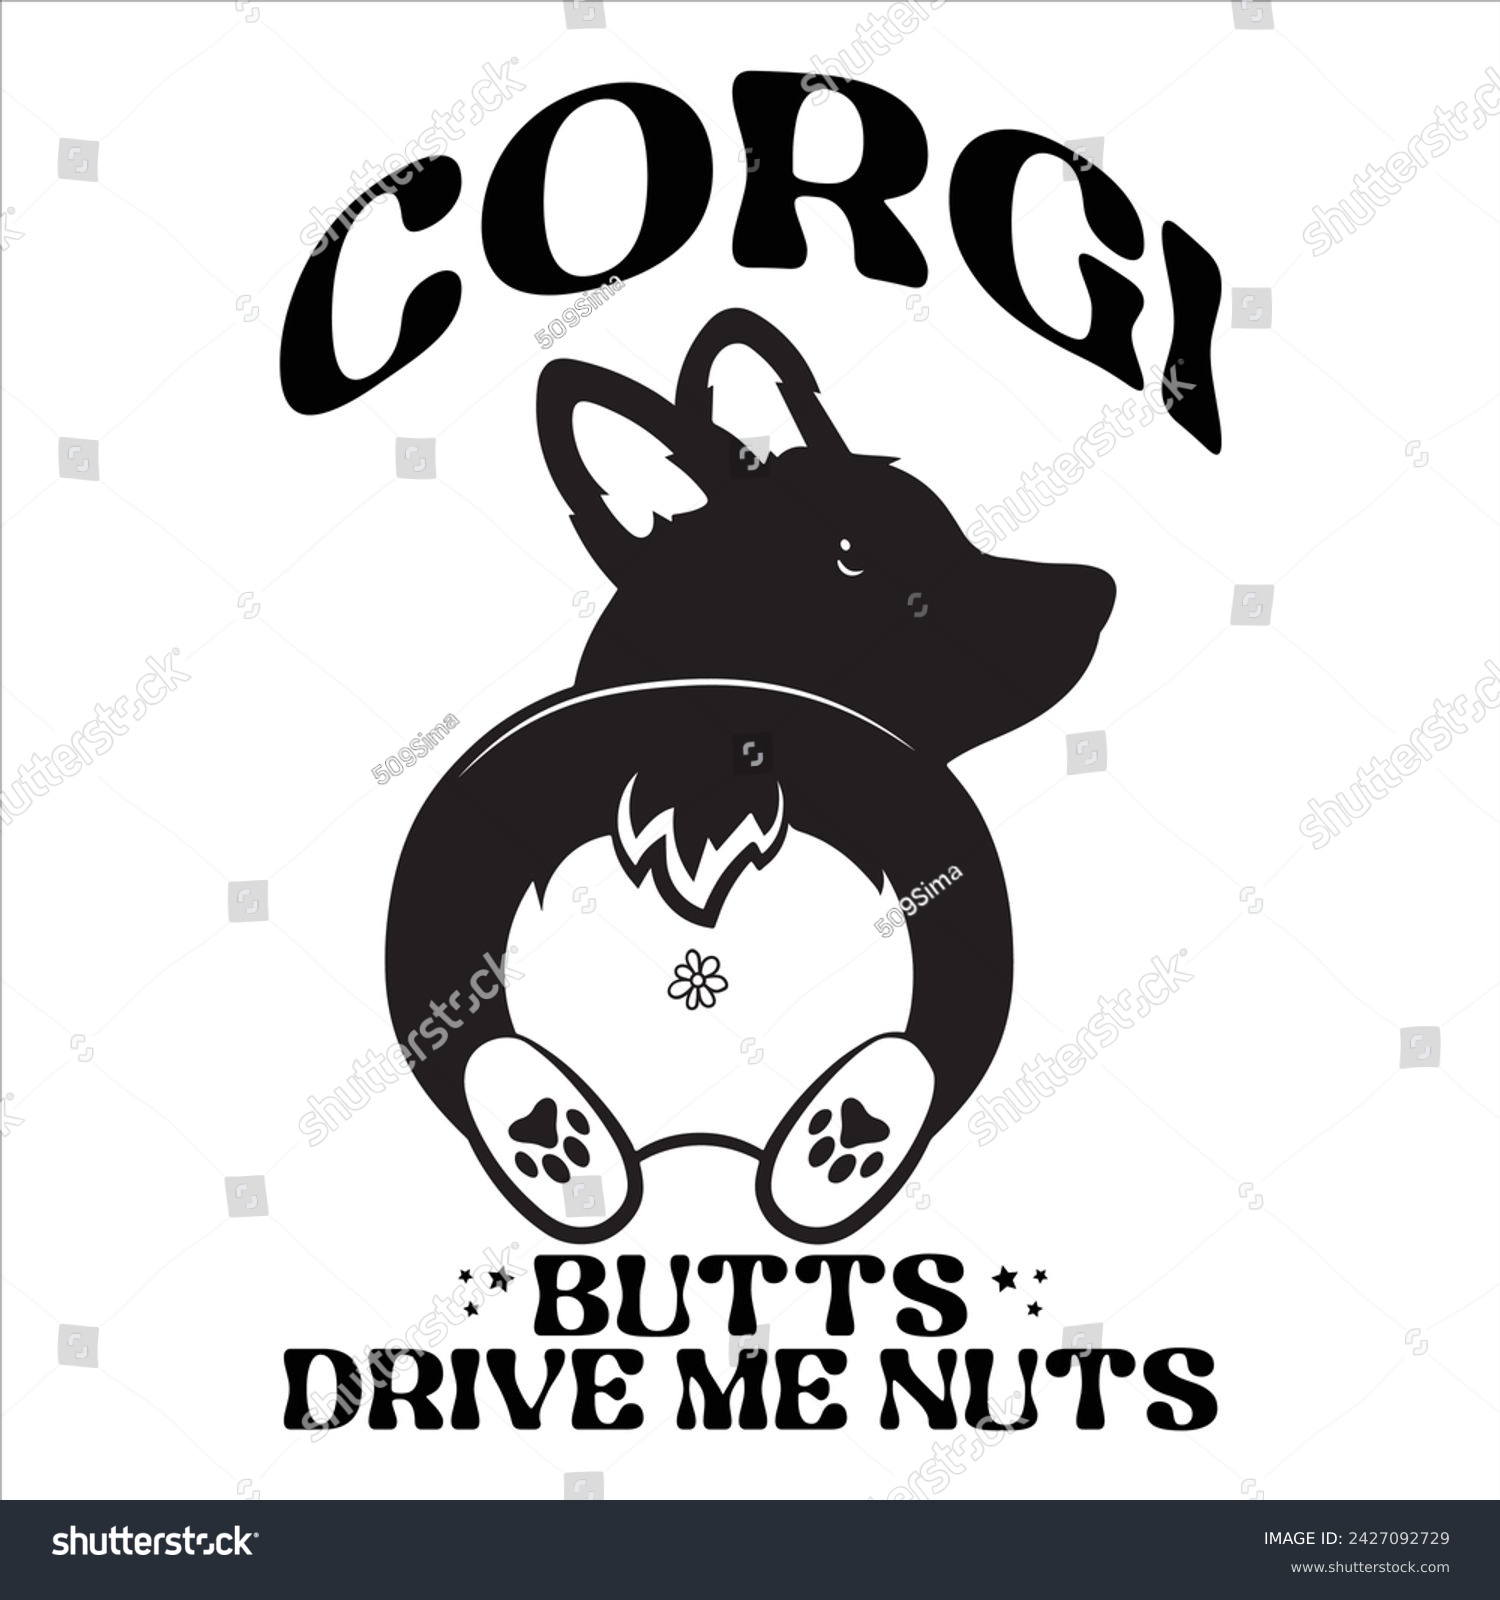 SVG of CORGI BUTTS DRIVE ME NUTS  
DOG T-SHIRT DESIGN svg